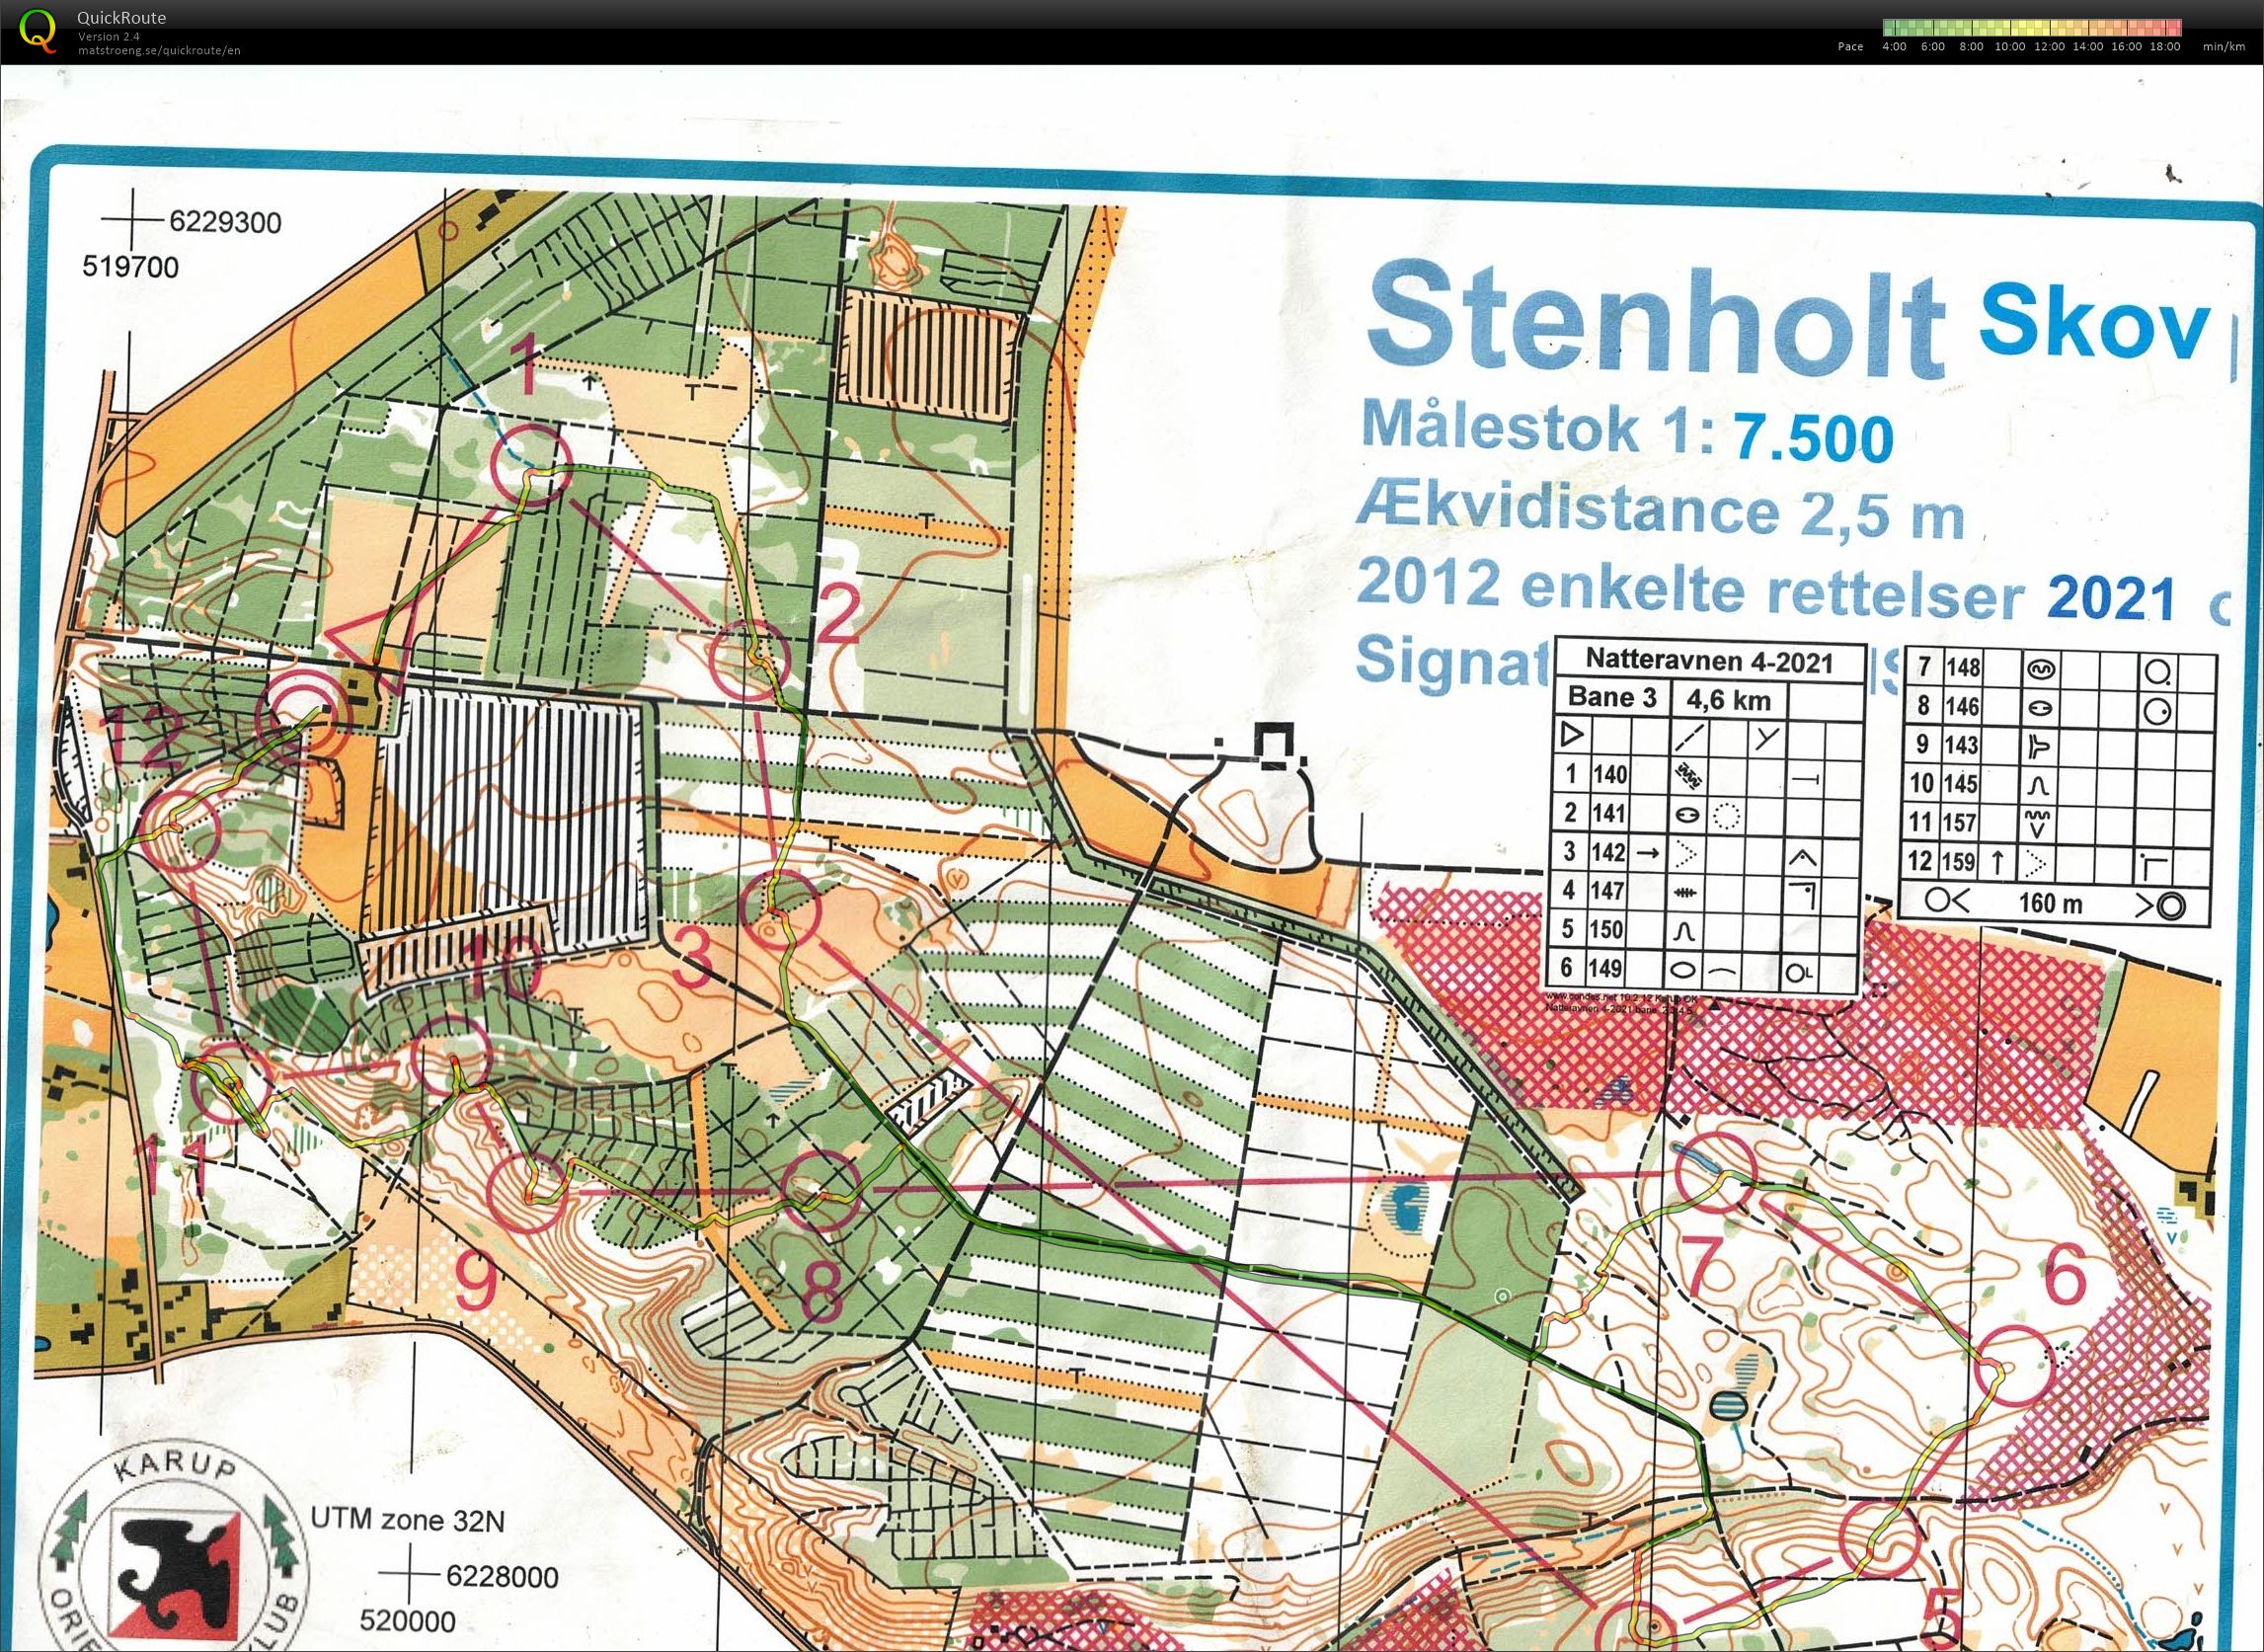 Stenholt, Natteravn 4, bane 3 (10-11-2021)